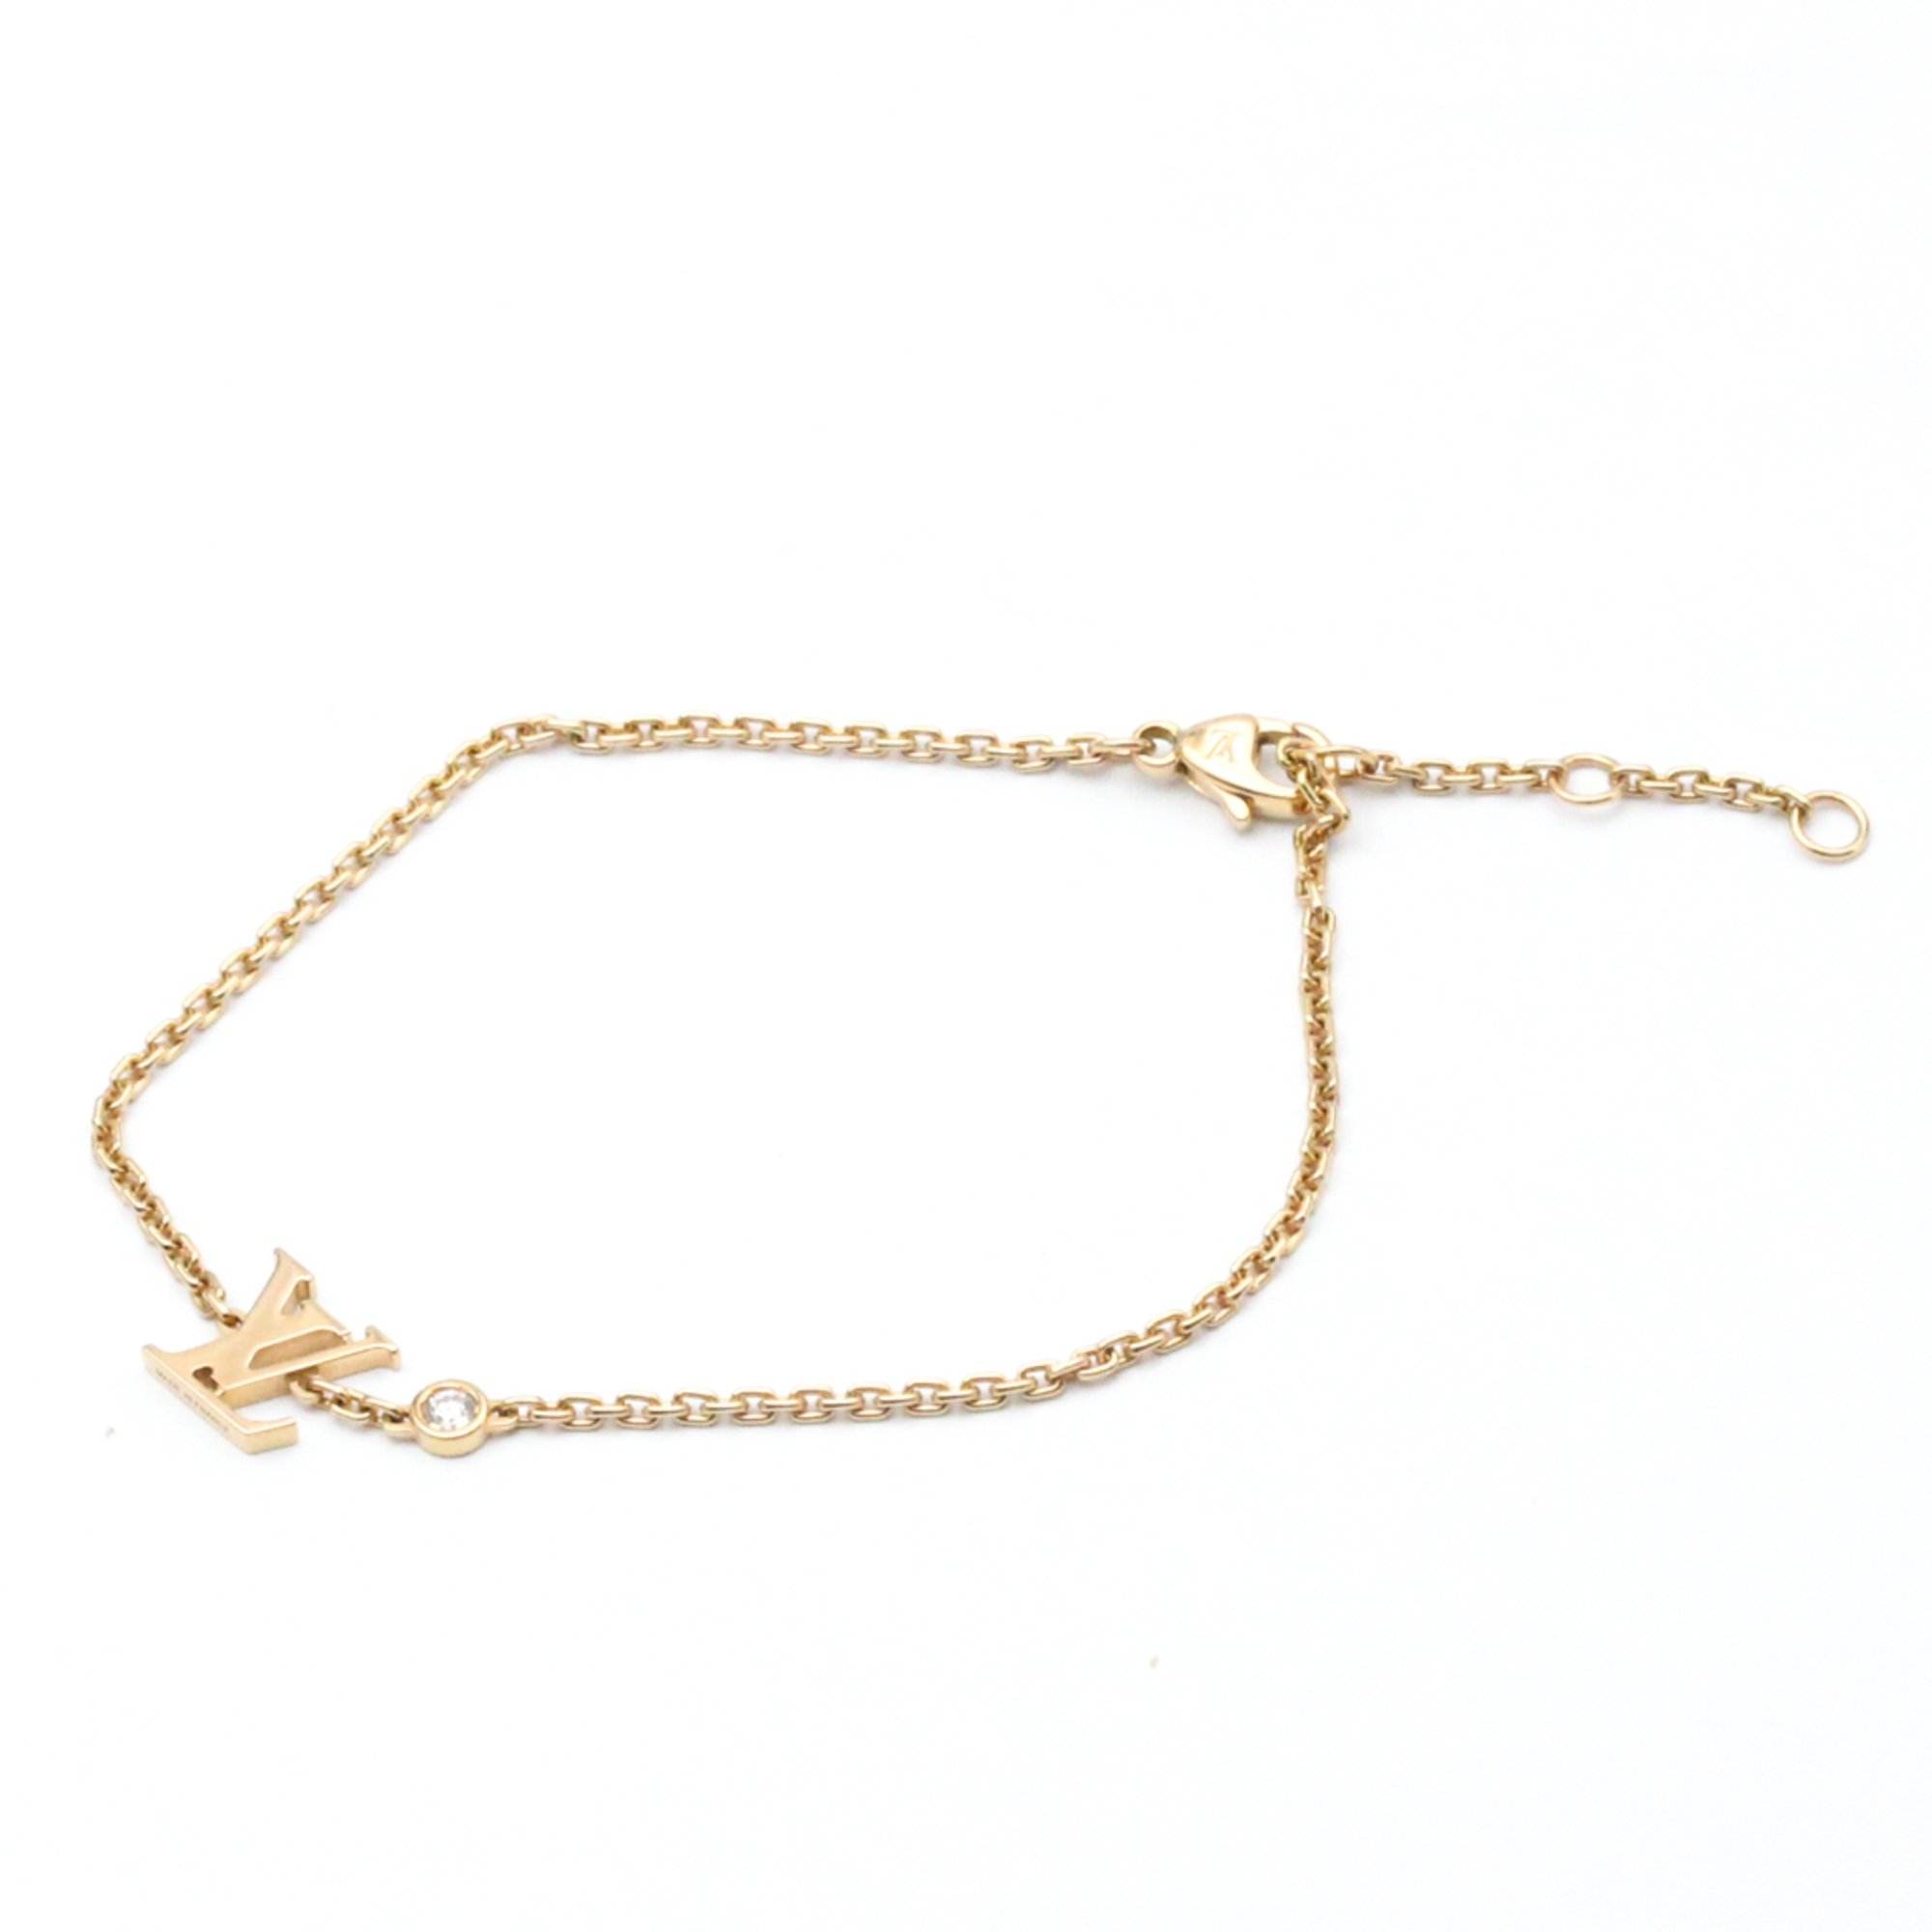 Louis Vuitton Bracelet Ideal Blossom LV Q95595 Pink Gold (18K) Diamond Charm Bracelet Pink Gold